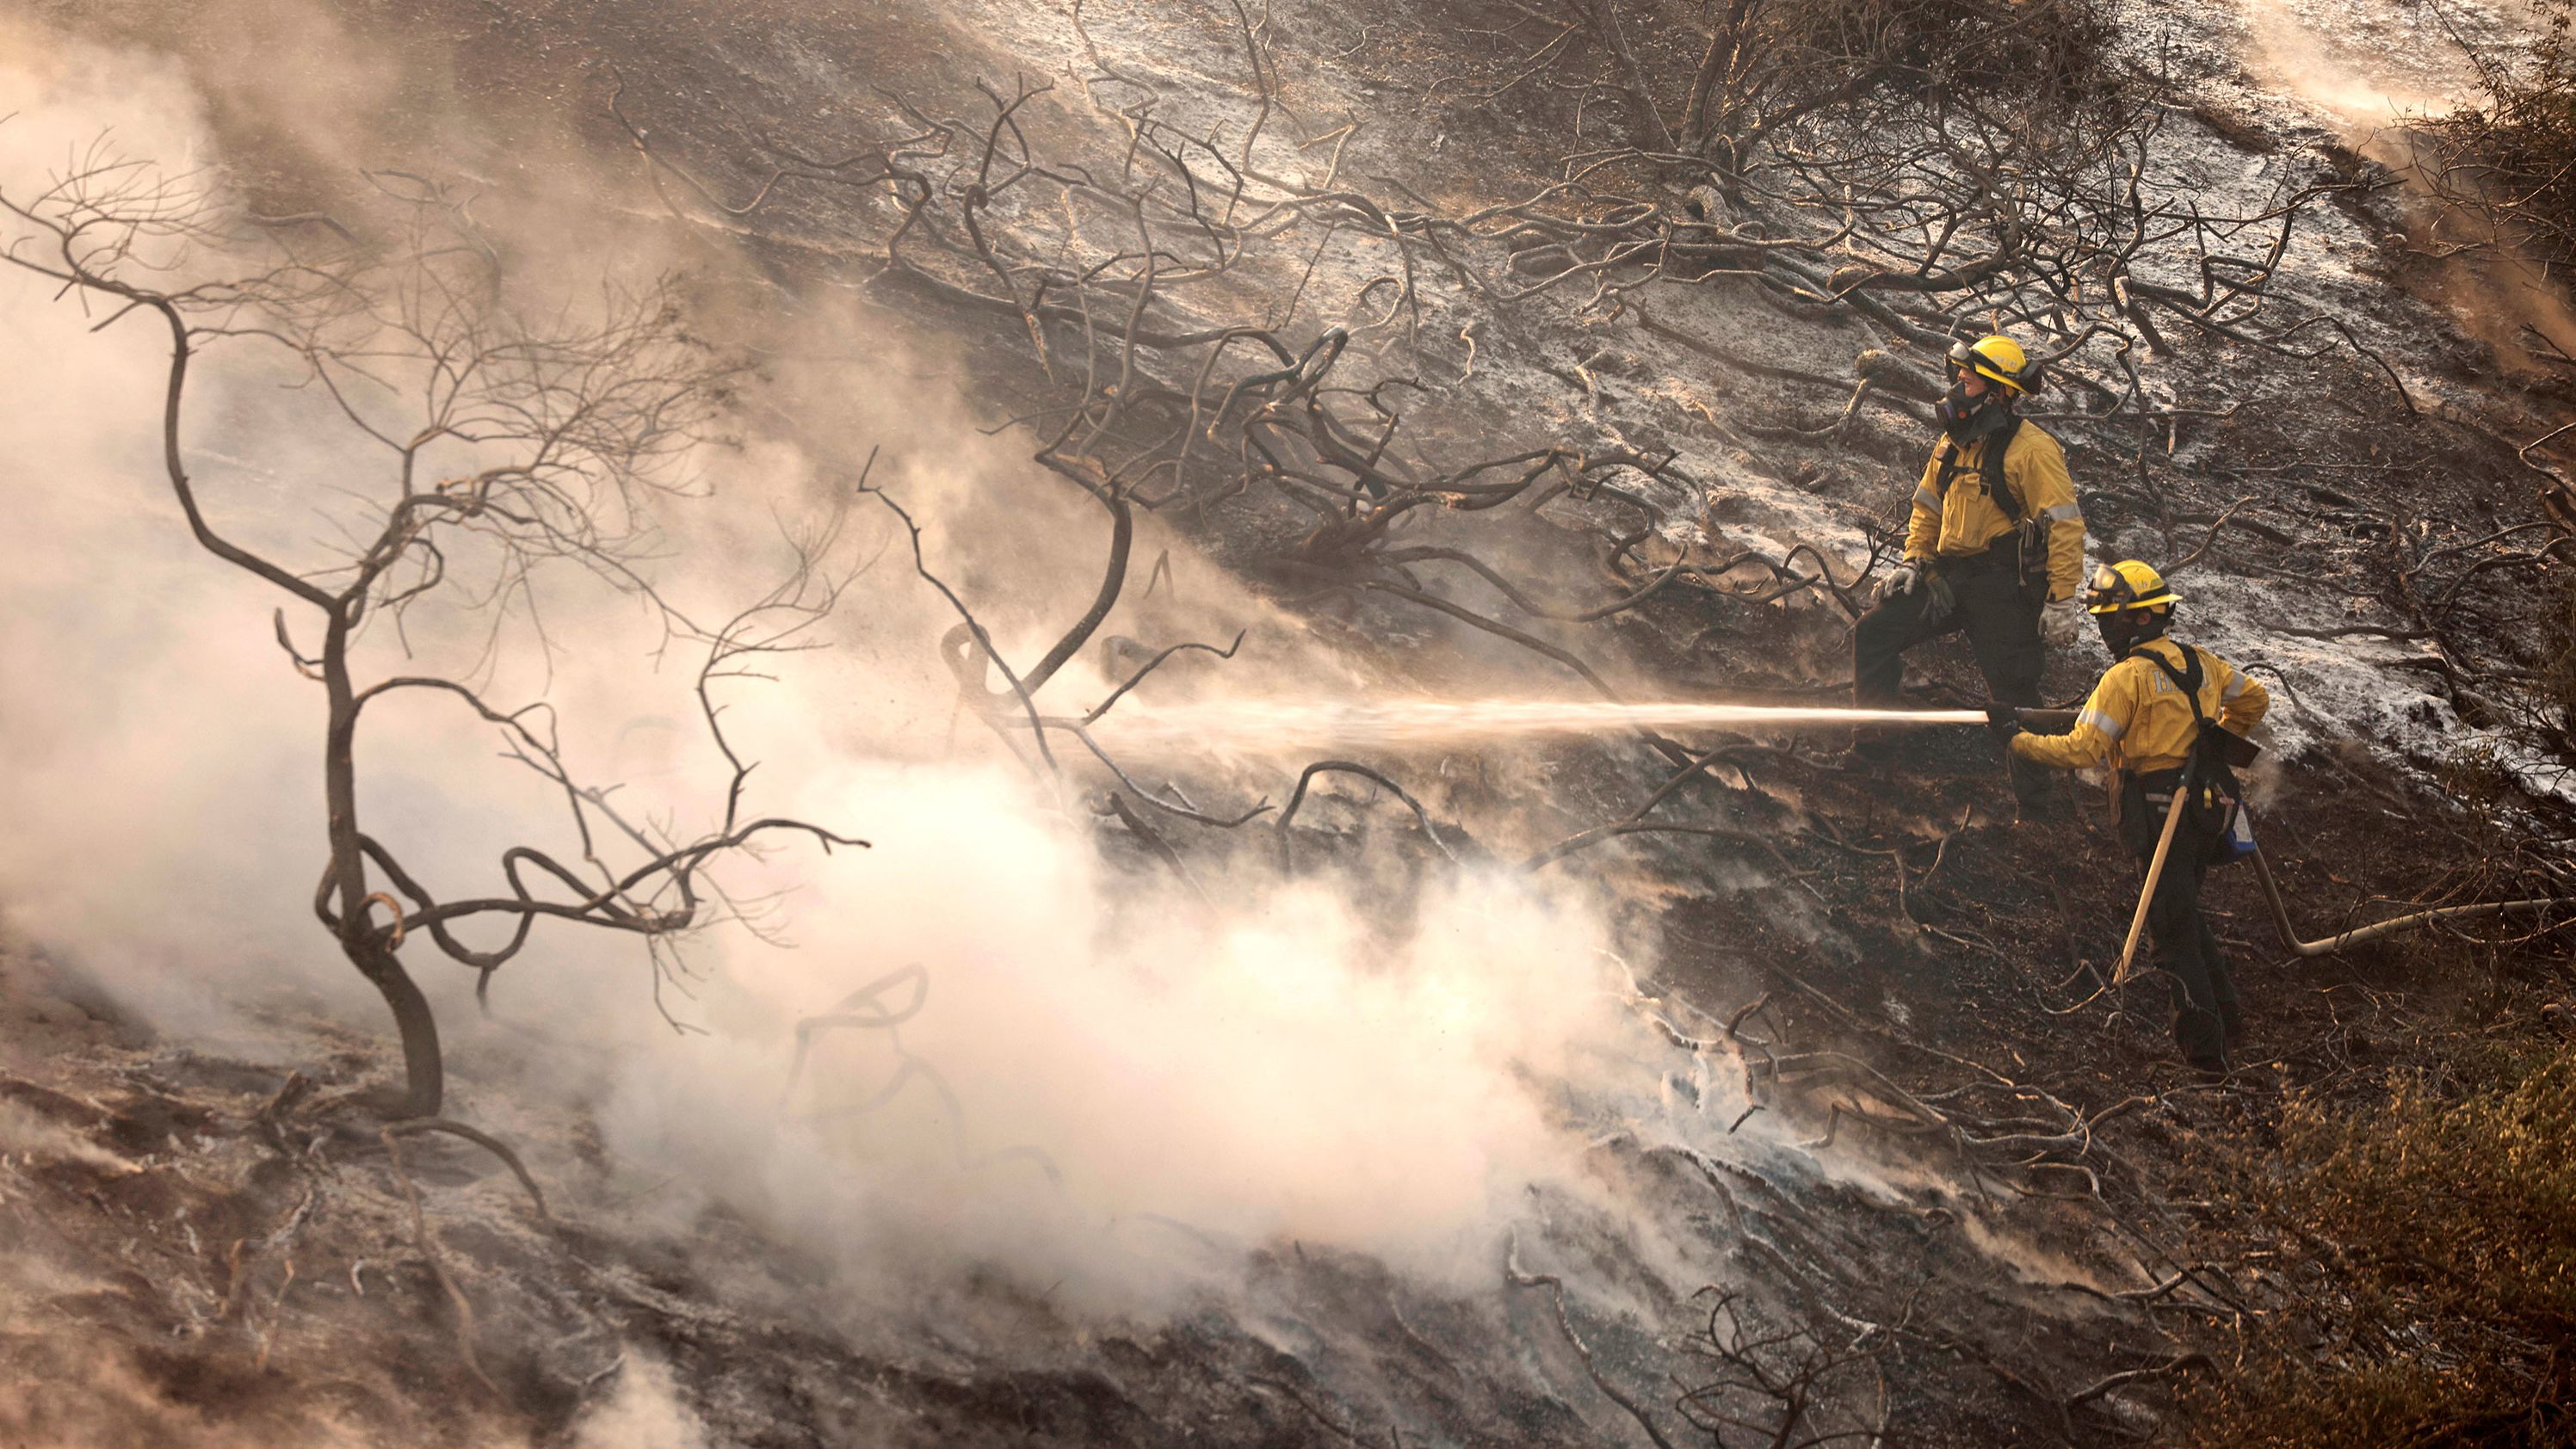 A firefighter uses a hose as the Silverado Fire approaches near Irvine, California.